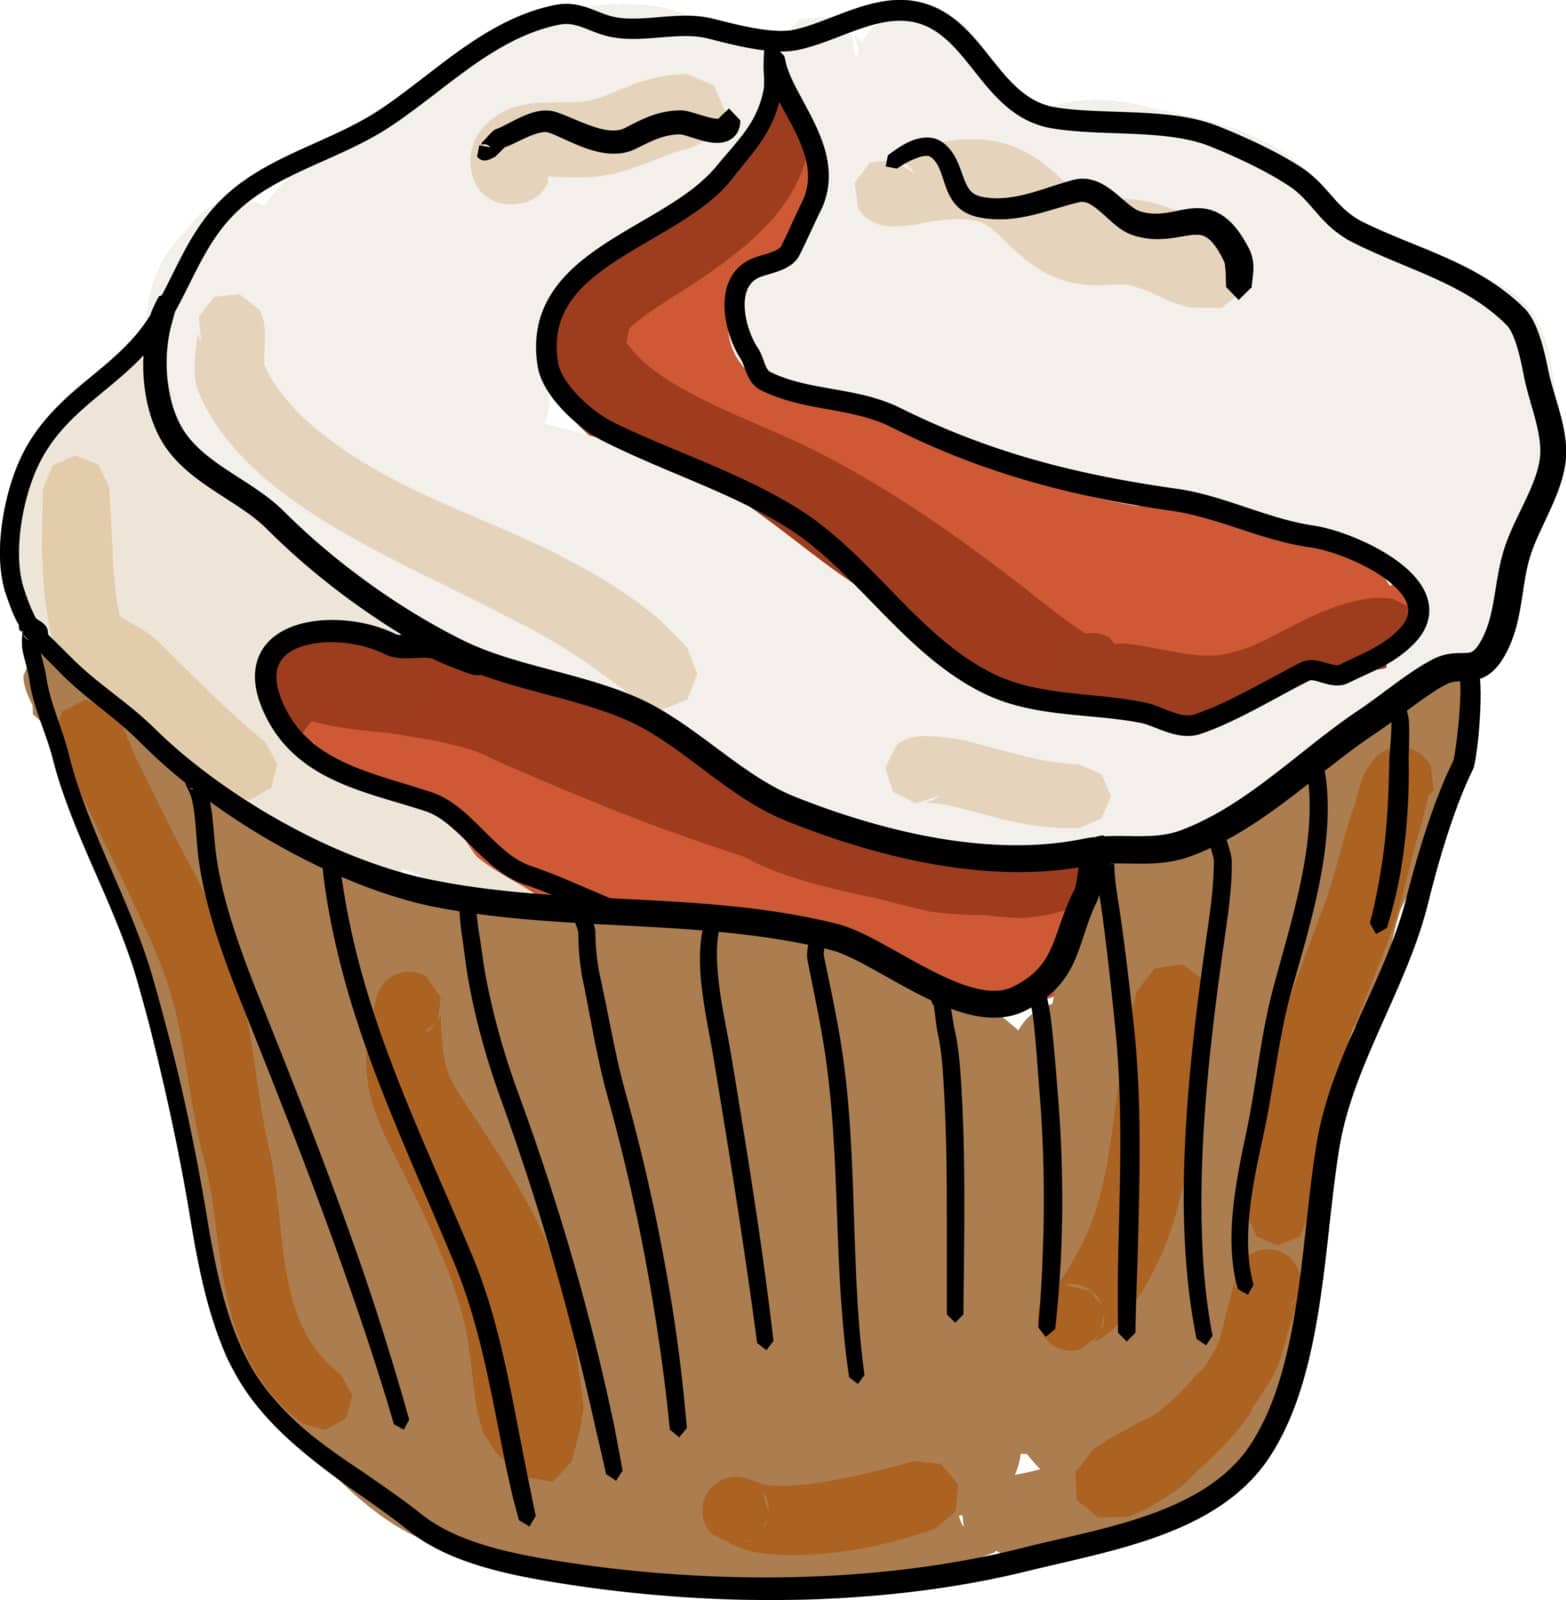 White cupcake, illustration, vector on white background. by Morphart